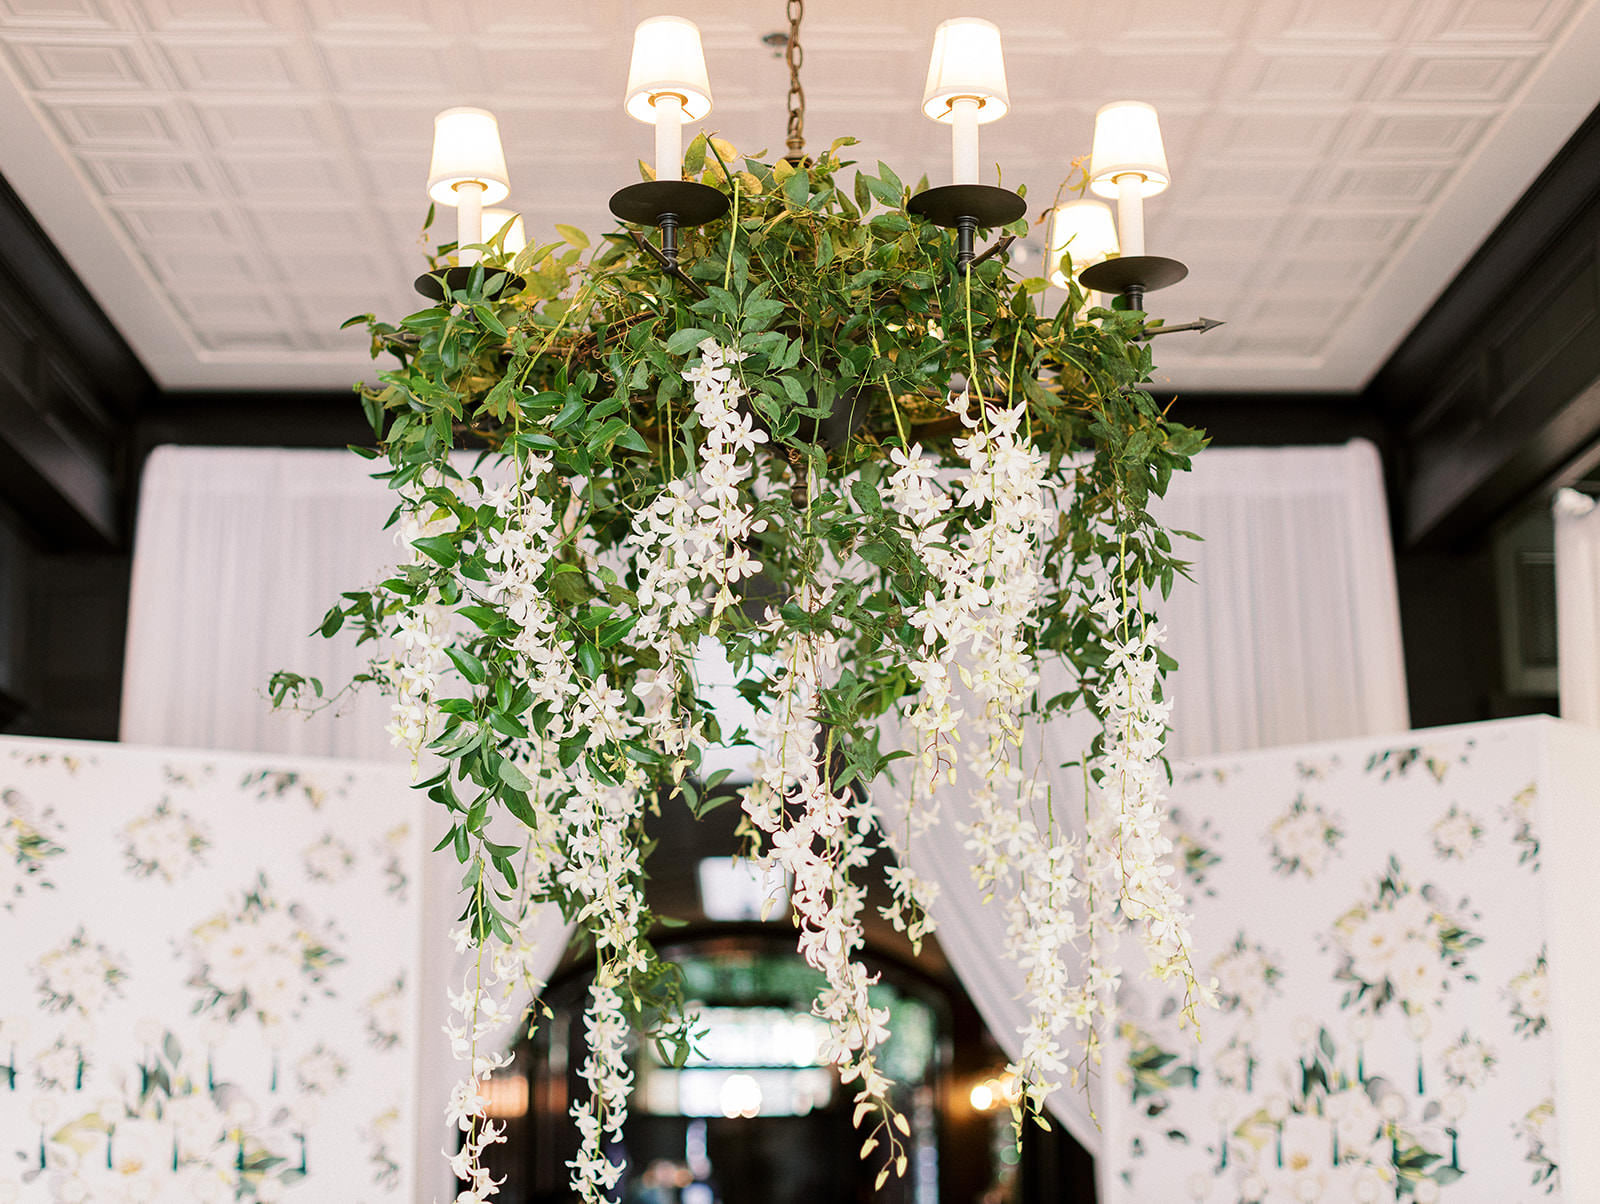 Classic Wedding Decor, Lush White Hanging Flowers with Greenery on Chandelier | Tampa Bay Wedding Florist Botanica